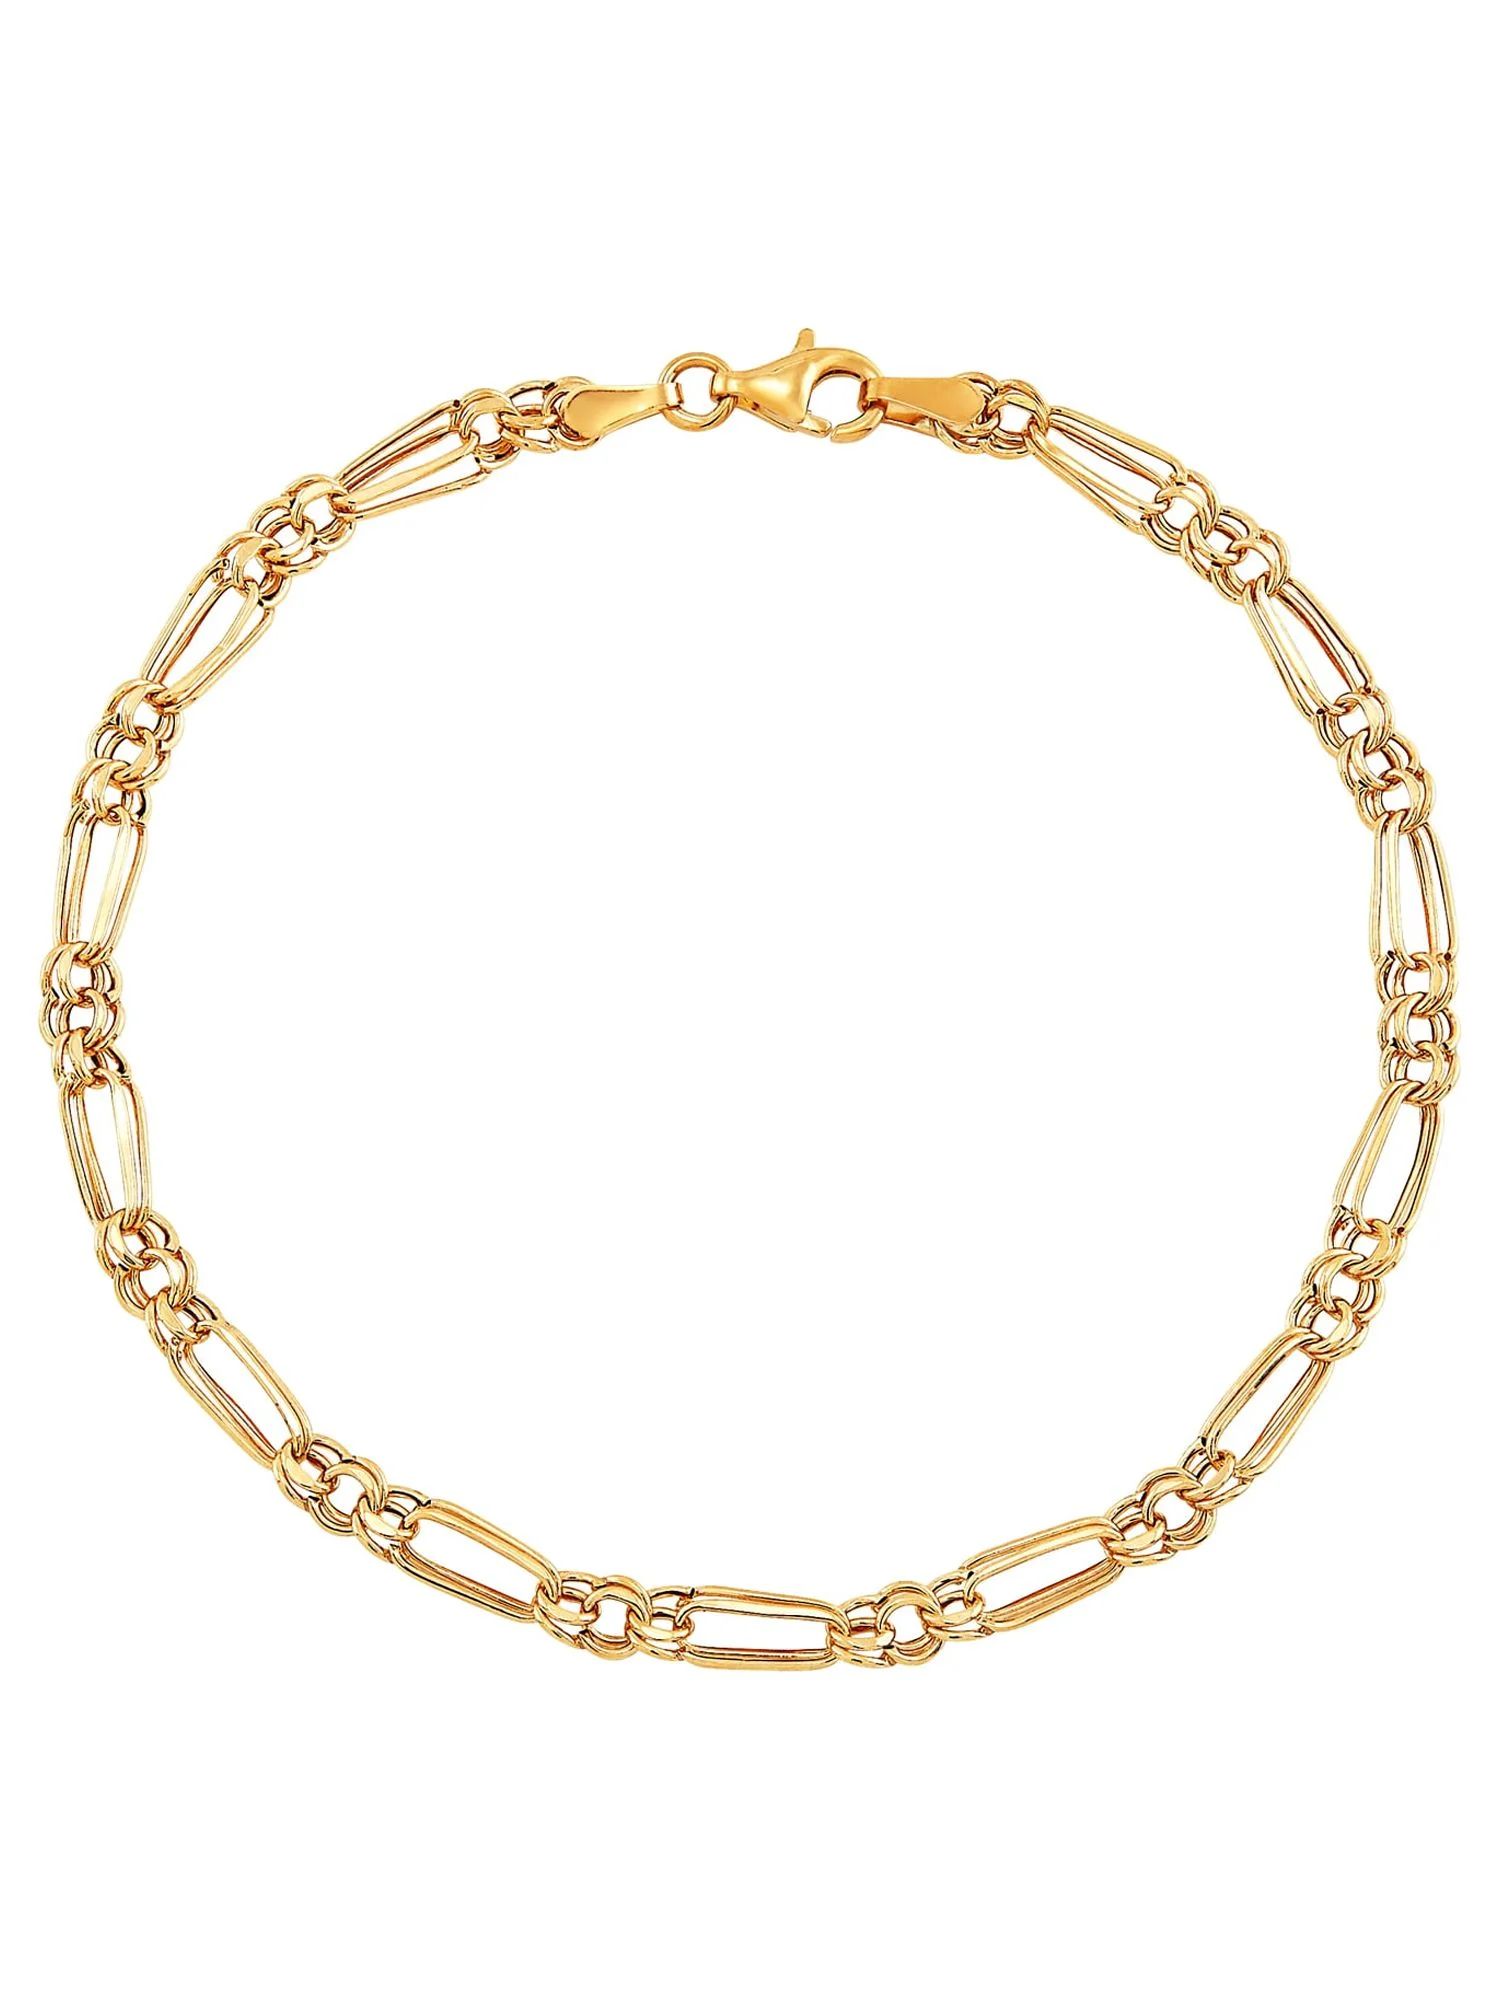 Brilliance Fine Jewelry 10K Yellow Gold Alternating Oval and Round Links Bracelet, 7.5" | Walmart (US)